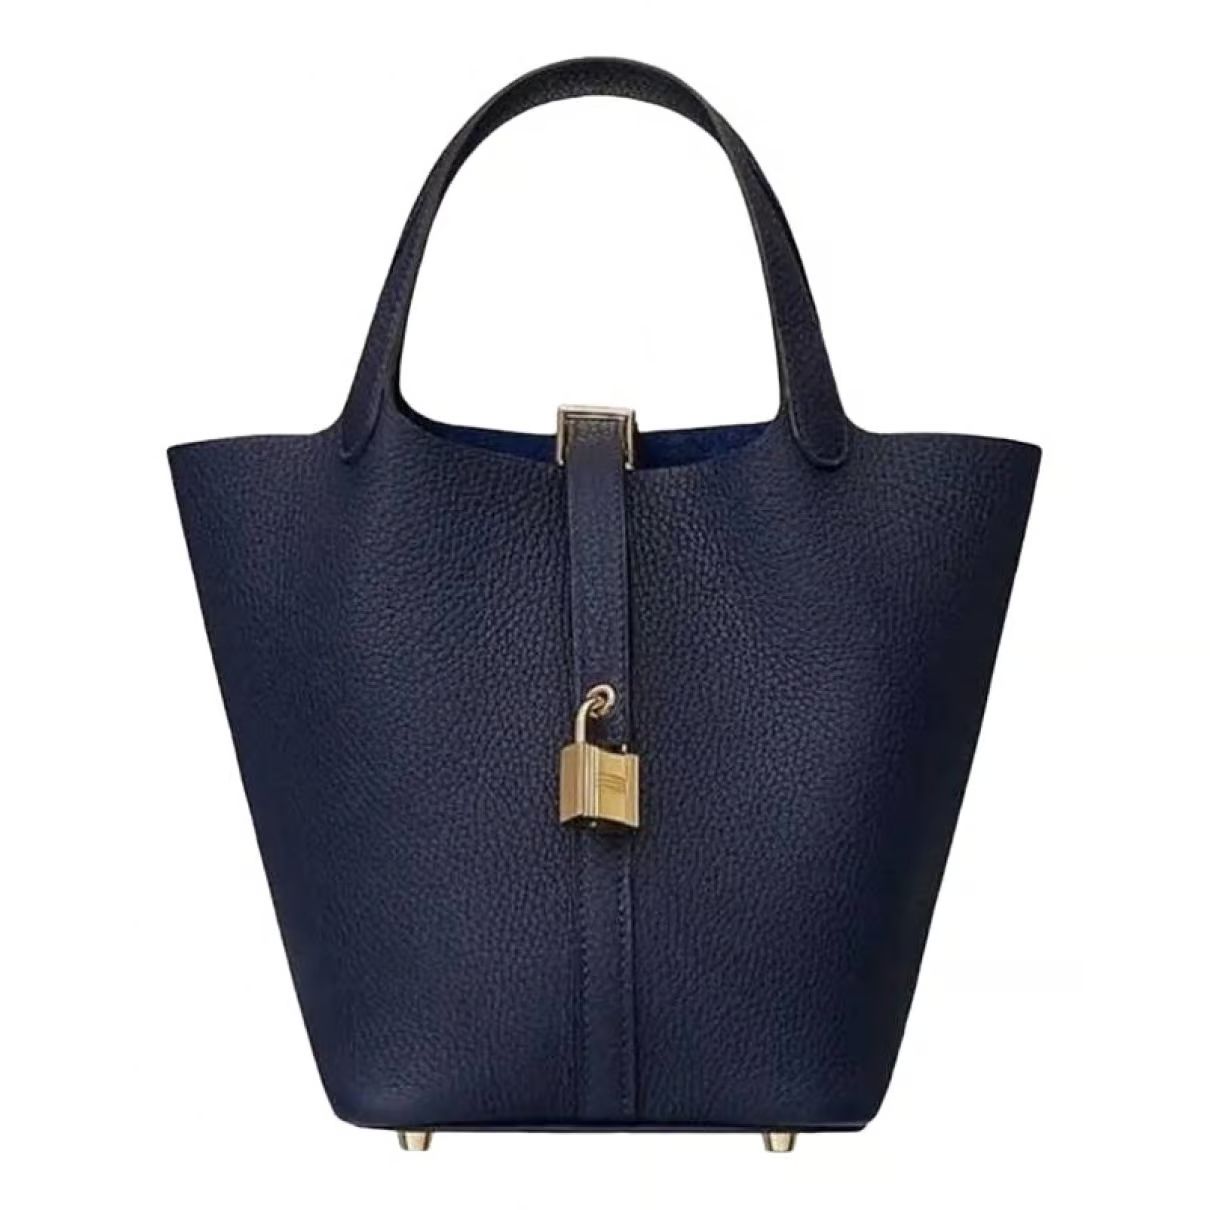 Hermès Picotin Handbag | Buy or Sell your Luxury Handbags - Vestiaire Collective | Vestiaire Collective (Global)